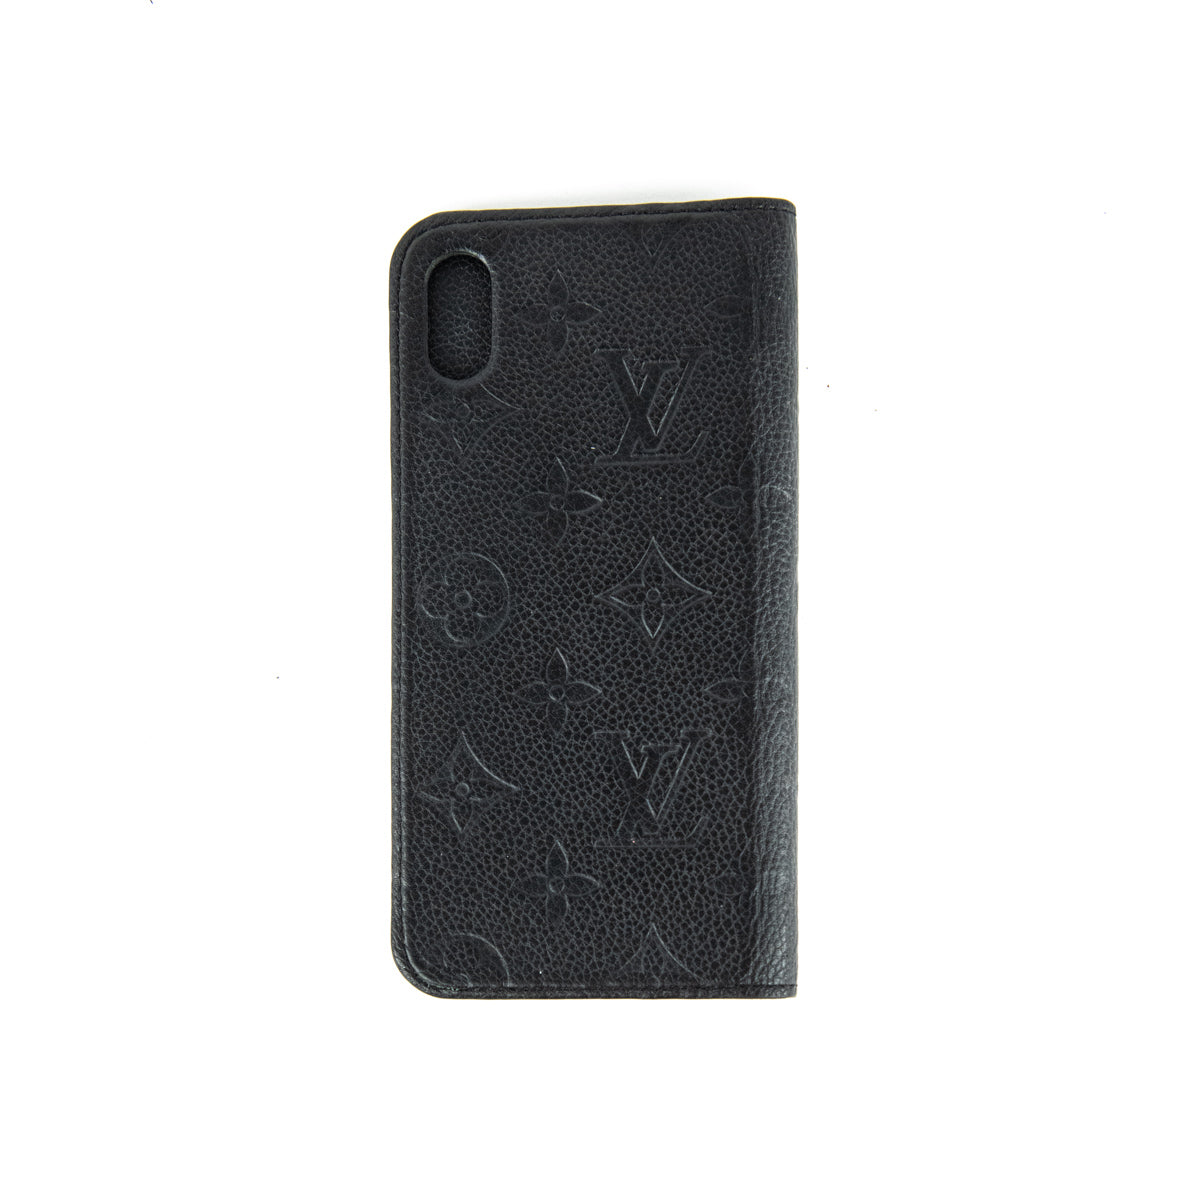 Louis Vuitton Black Empreinte Monogram iPhone X/XS Folio Case